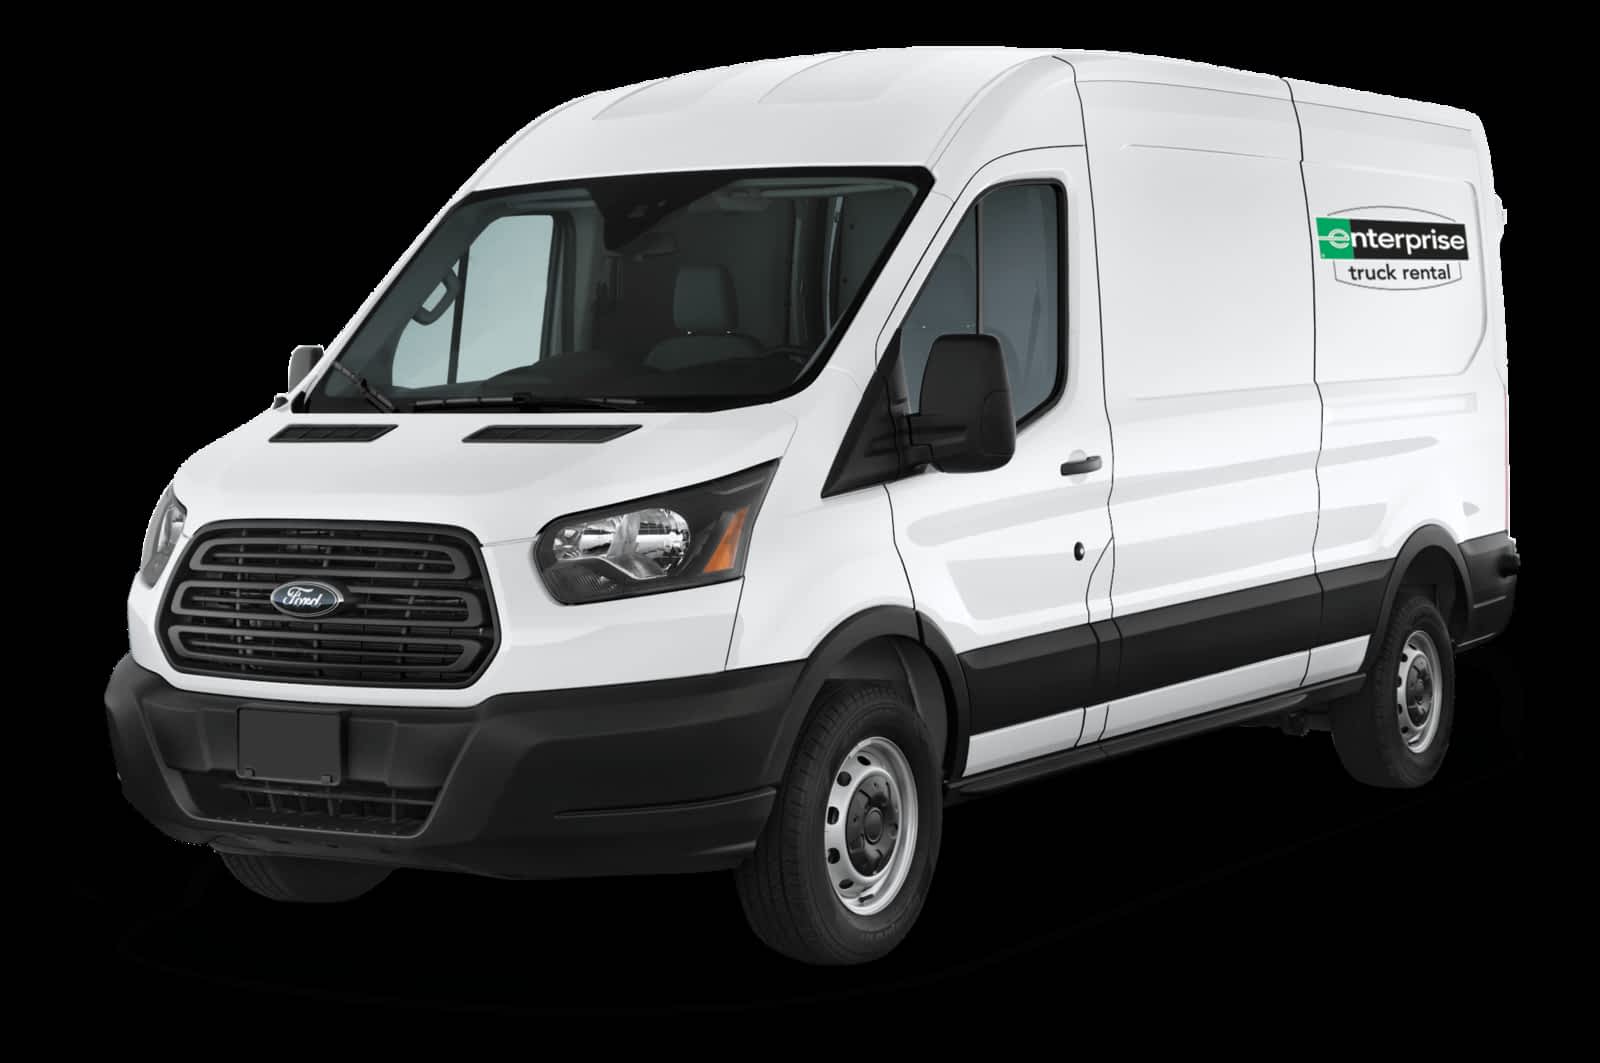 enterprise moving vans